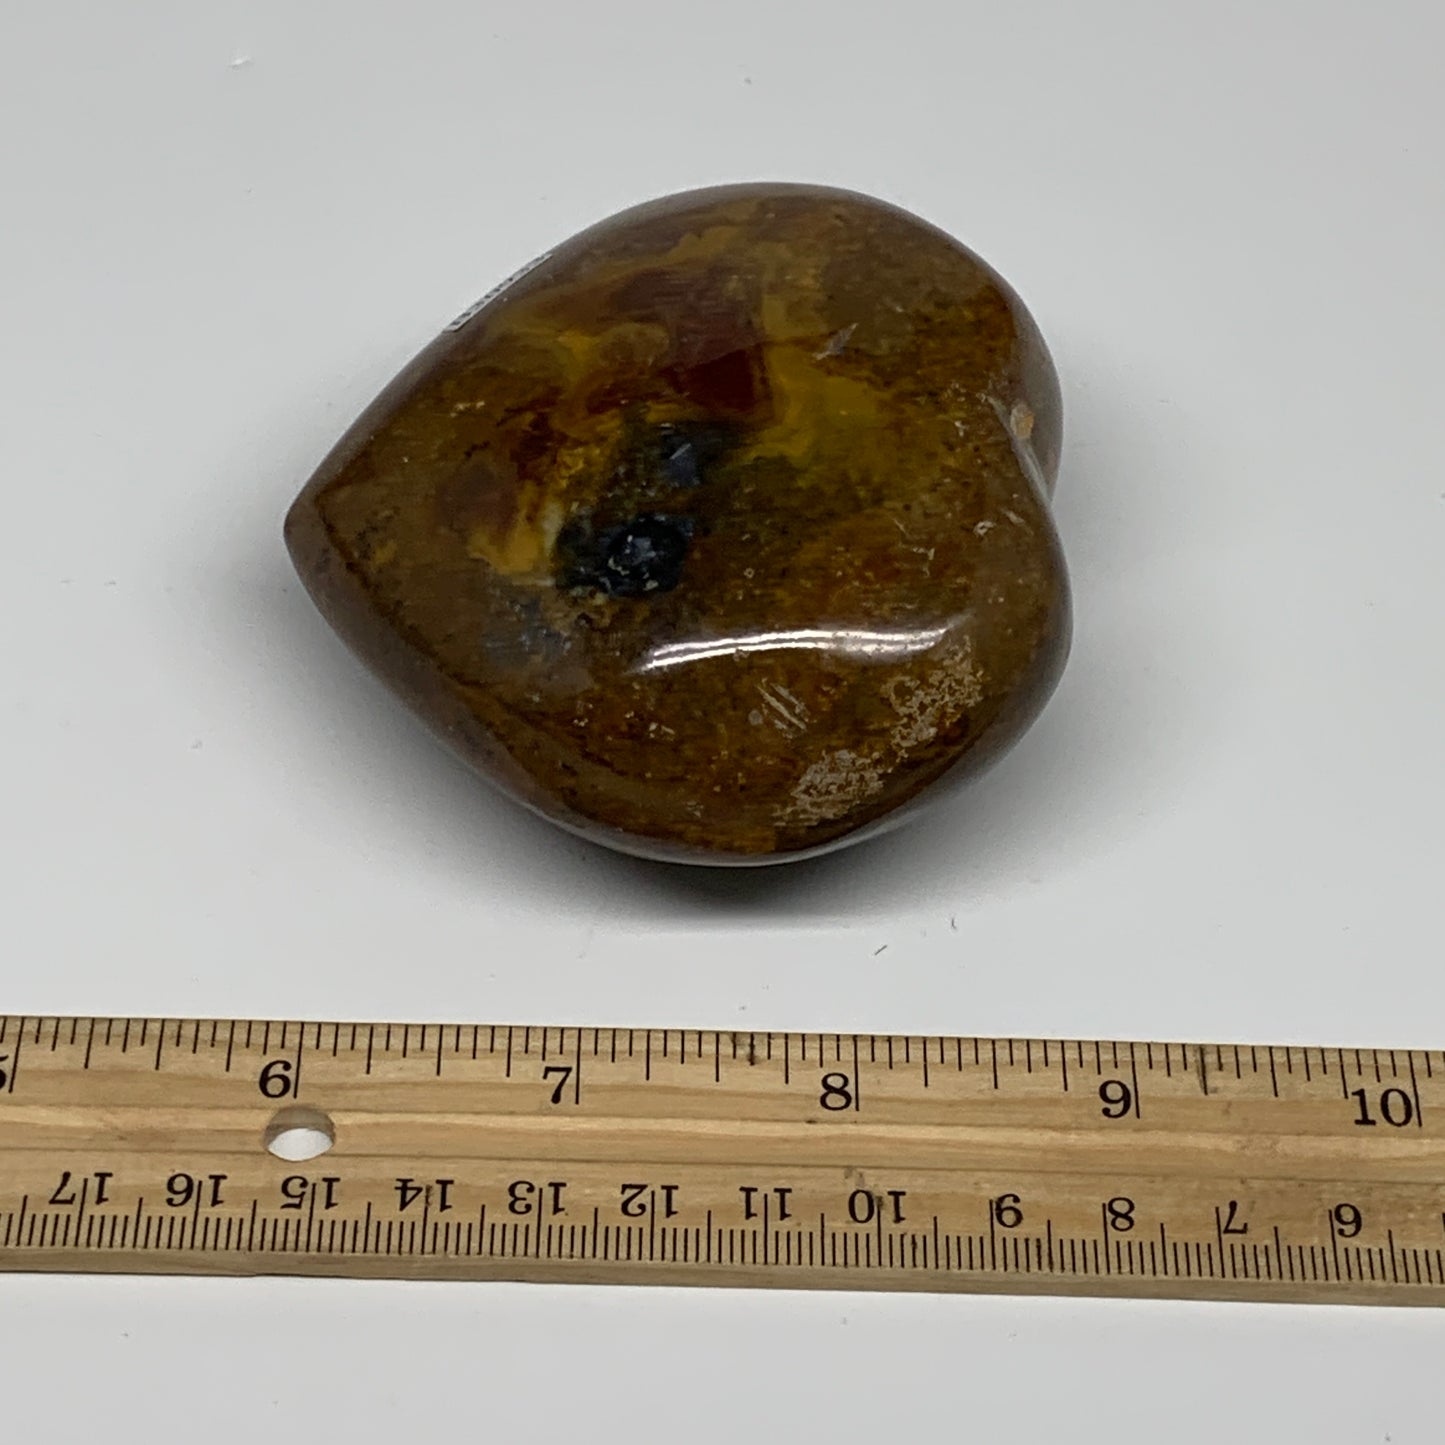 0.7 lbs, 3"x3.1"x1.6" Ocean Jasper Heart Polished Healing Crystal, B30933